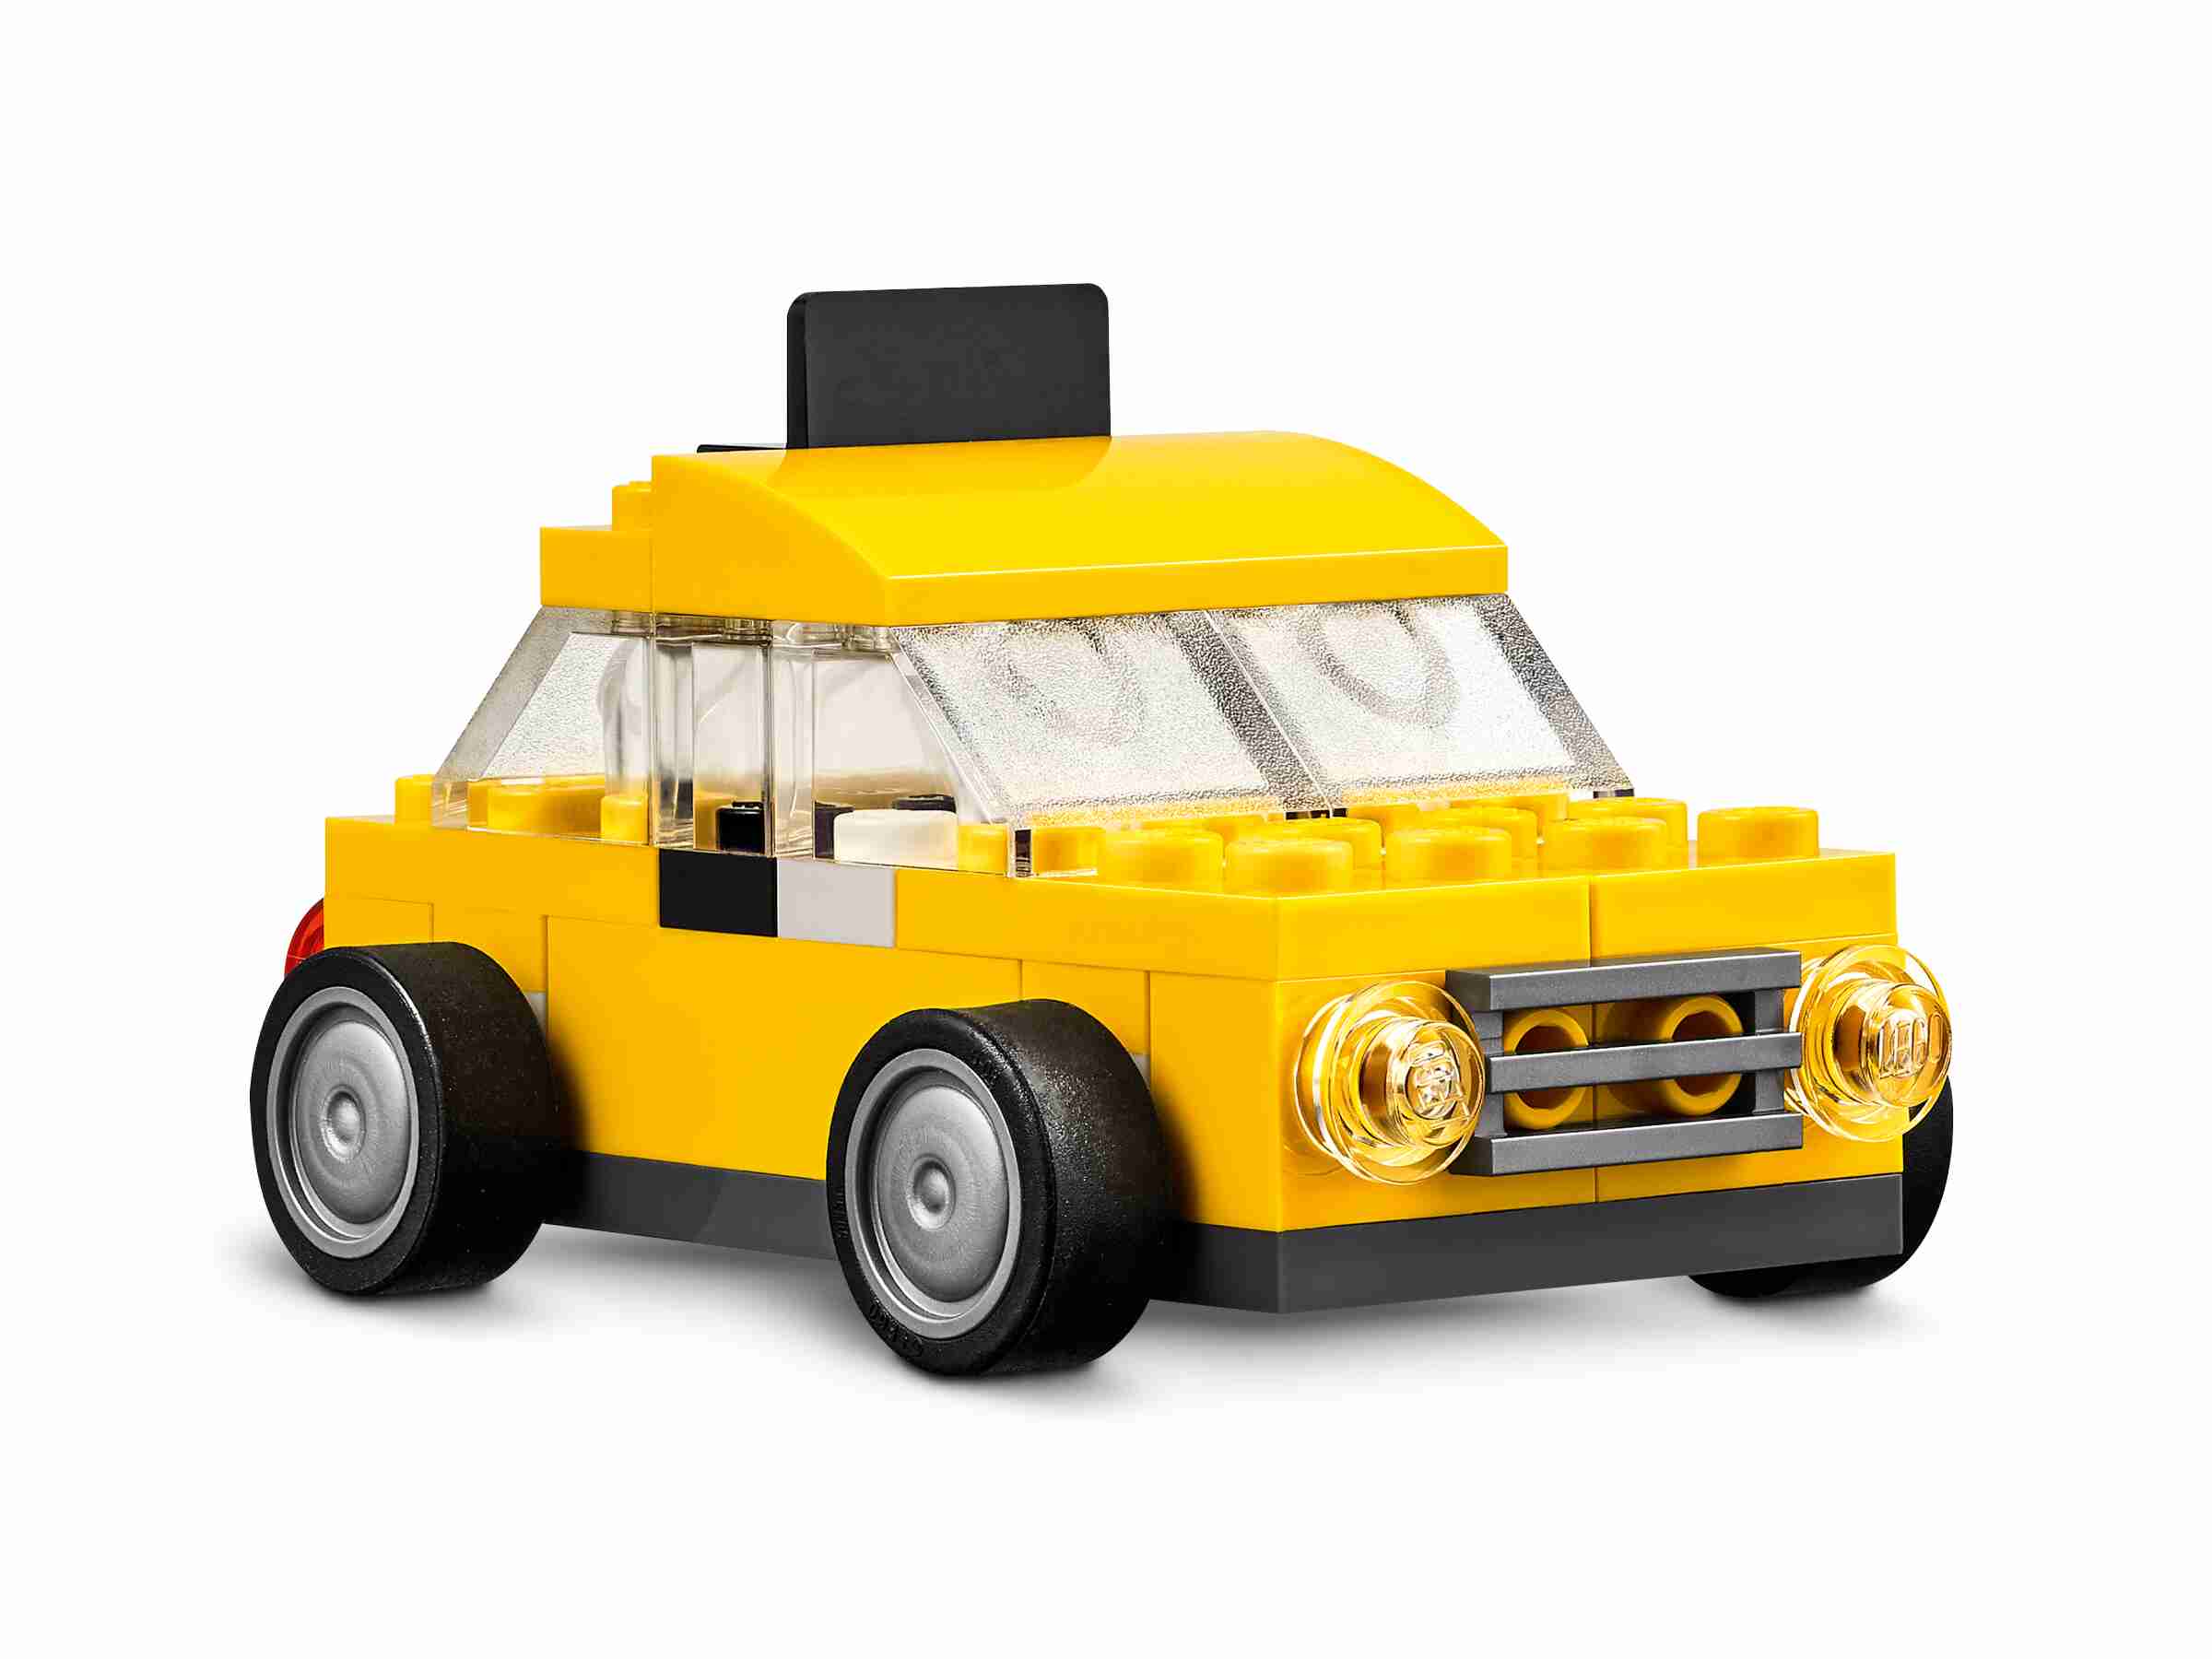 LEGO 11036 Classic Kreative Fahrzeuge, inlusive 10 Bauideen